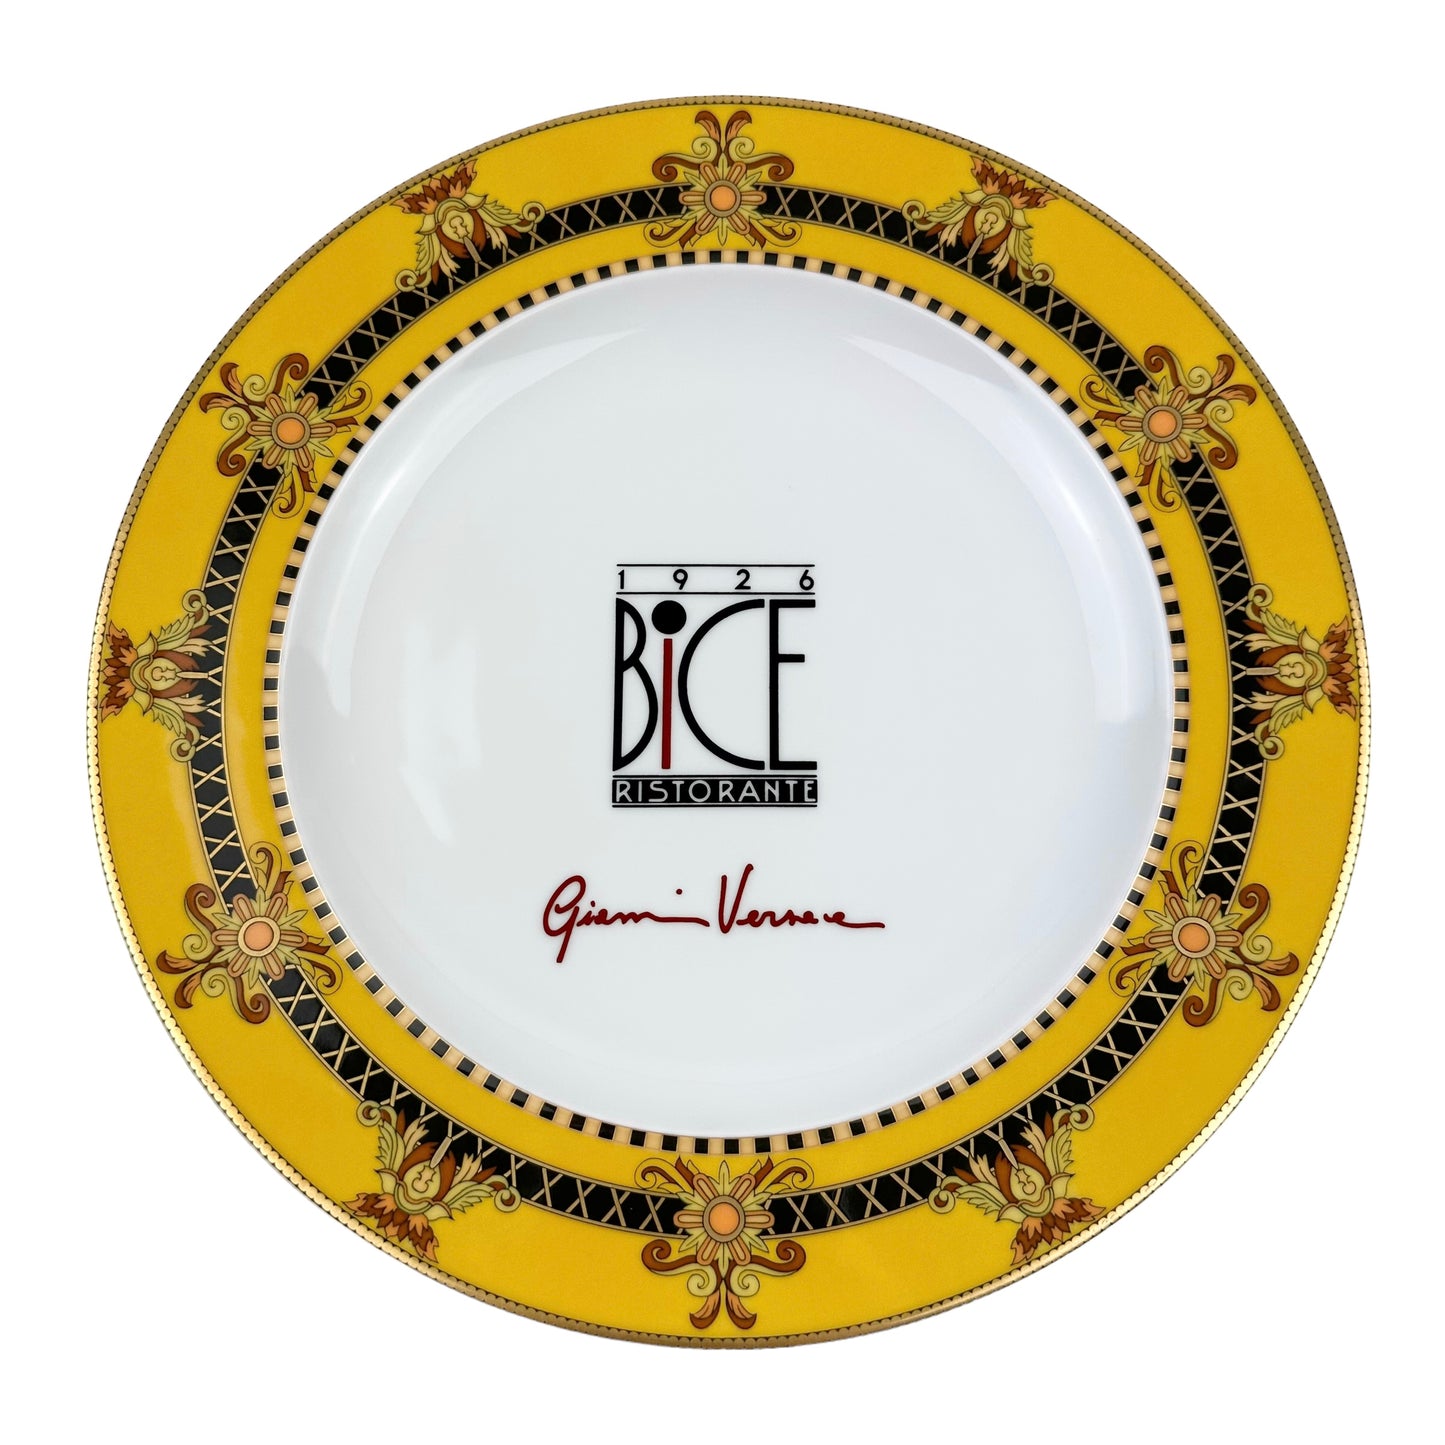 Versace Rosenthal Bice Restaurant Plate